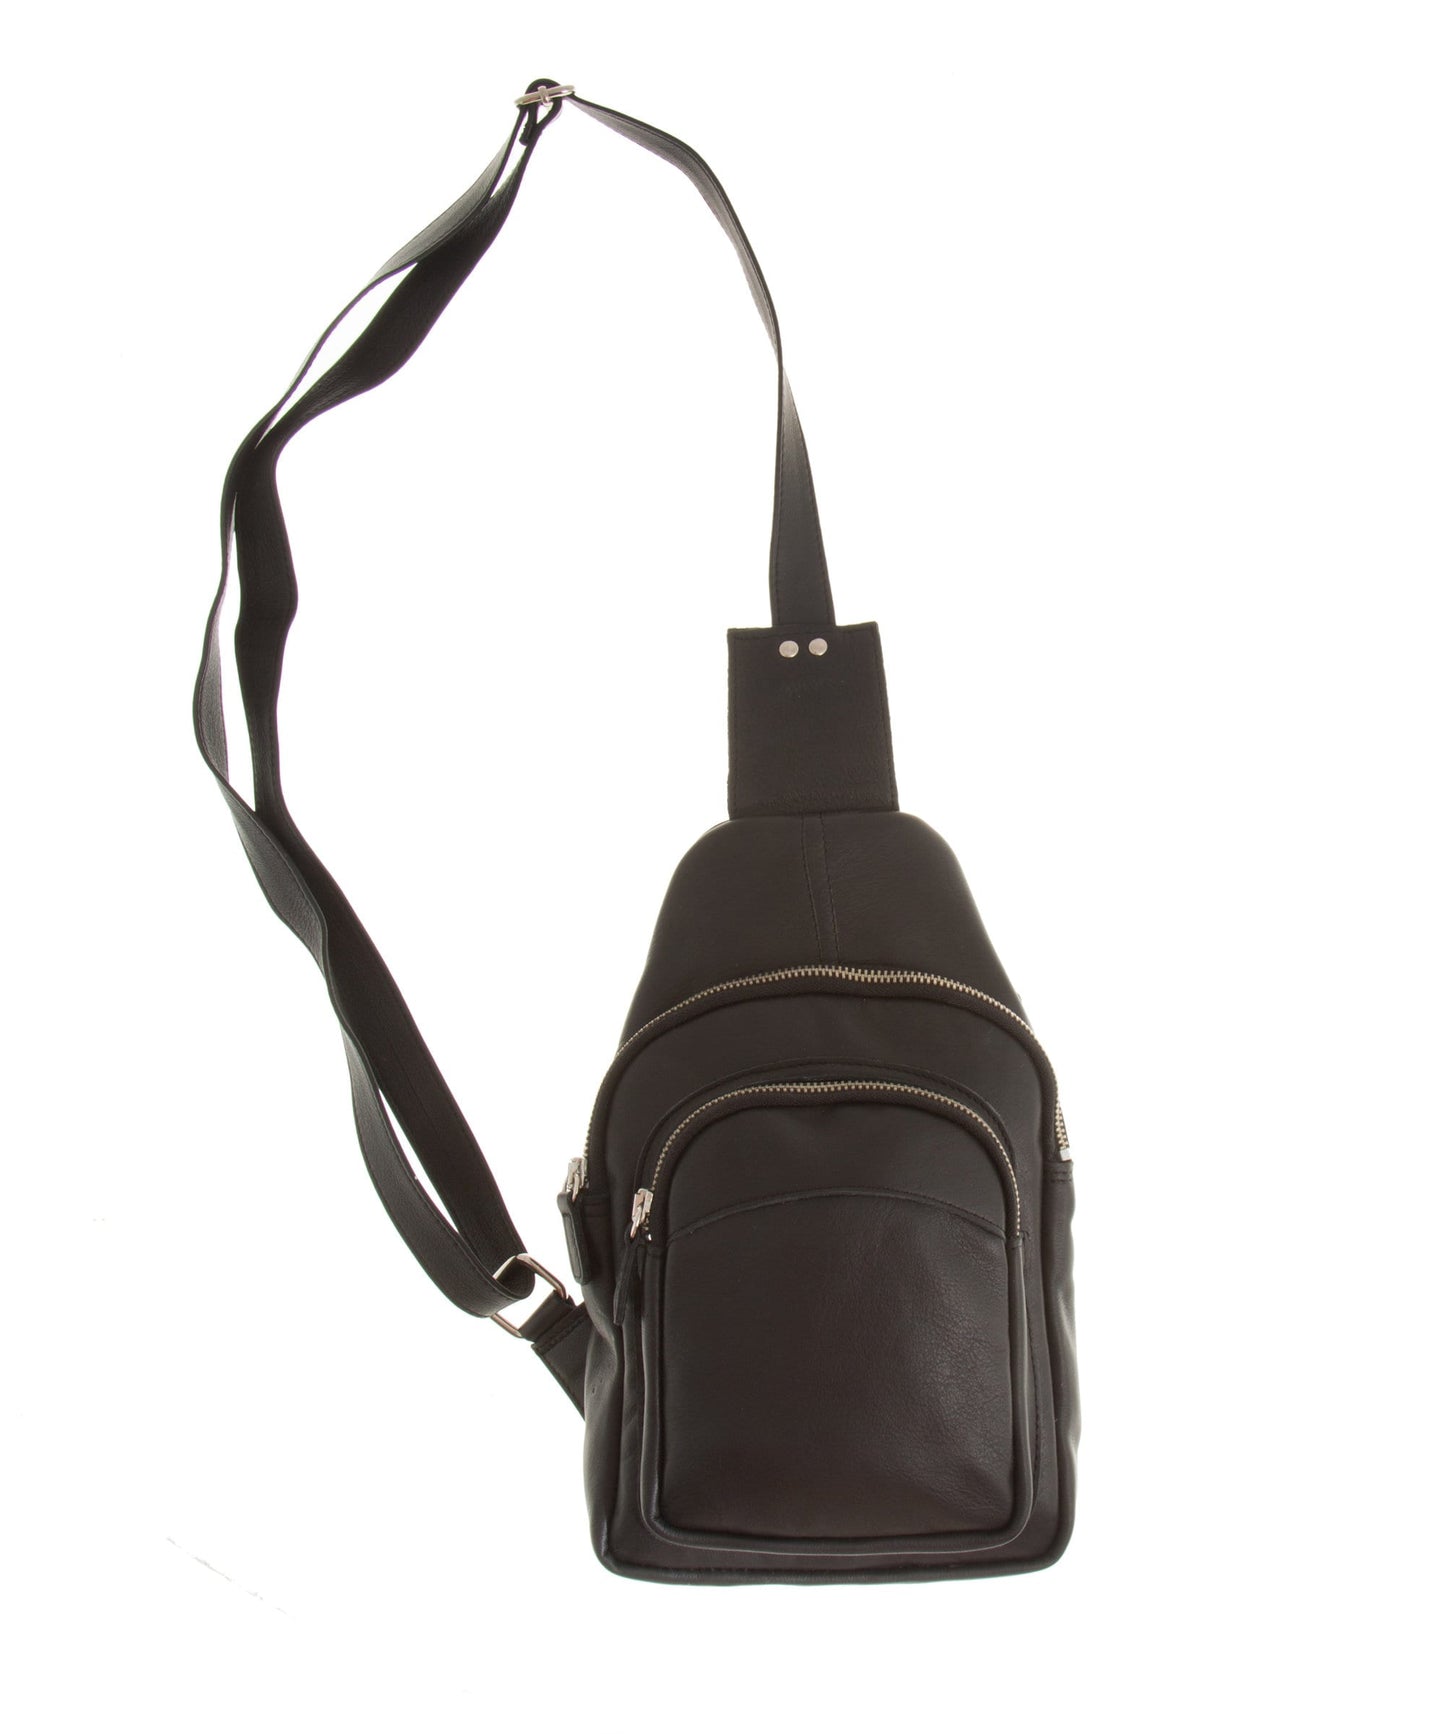 Mens leather bag, Crossbody mens leather sling bag, Mens leather shoulder bag, Travel Bag